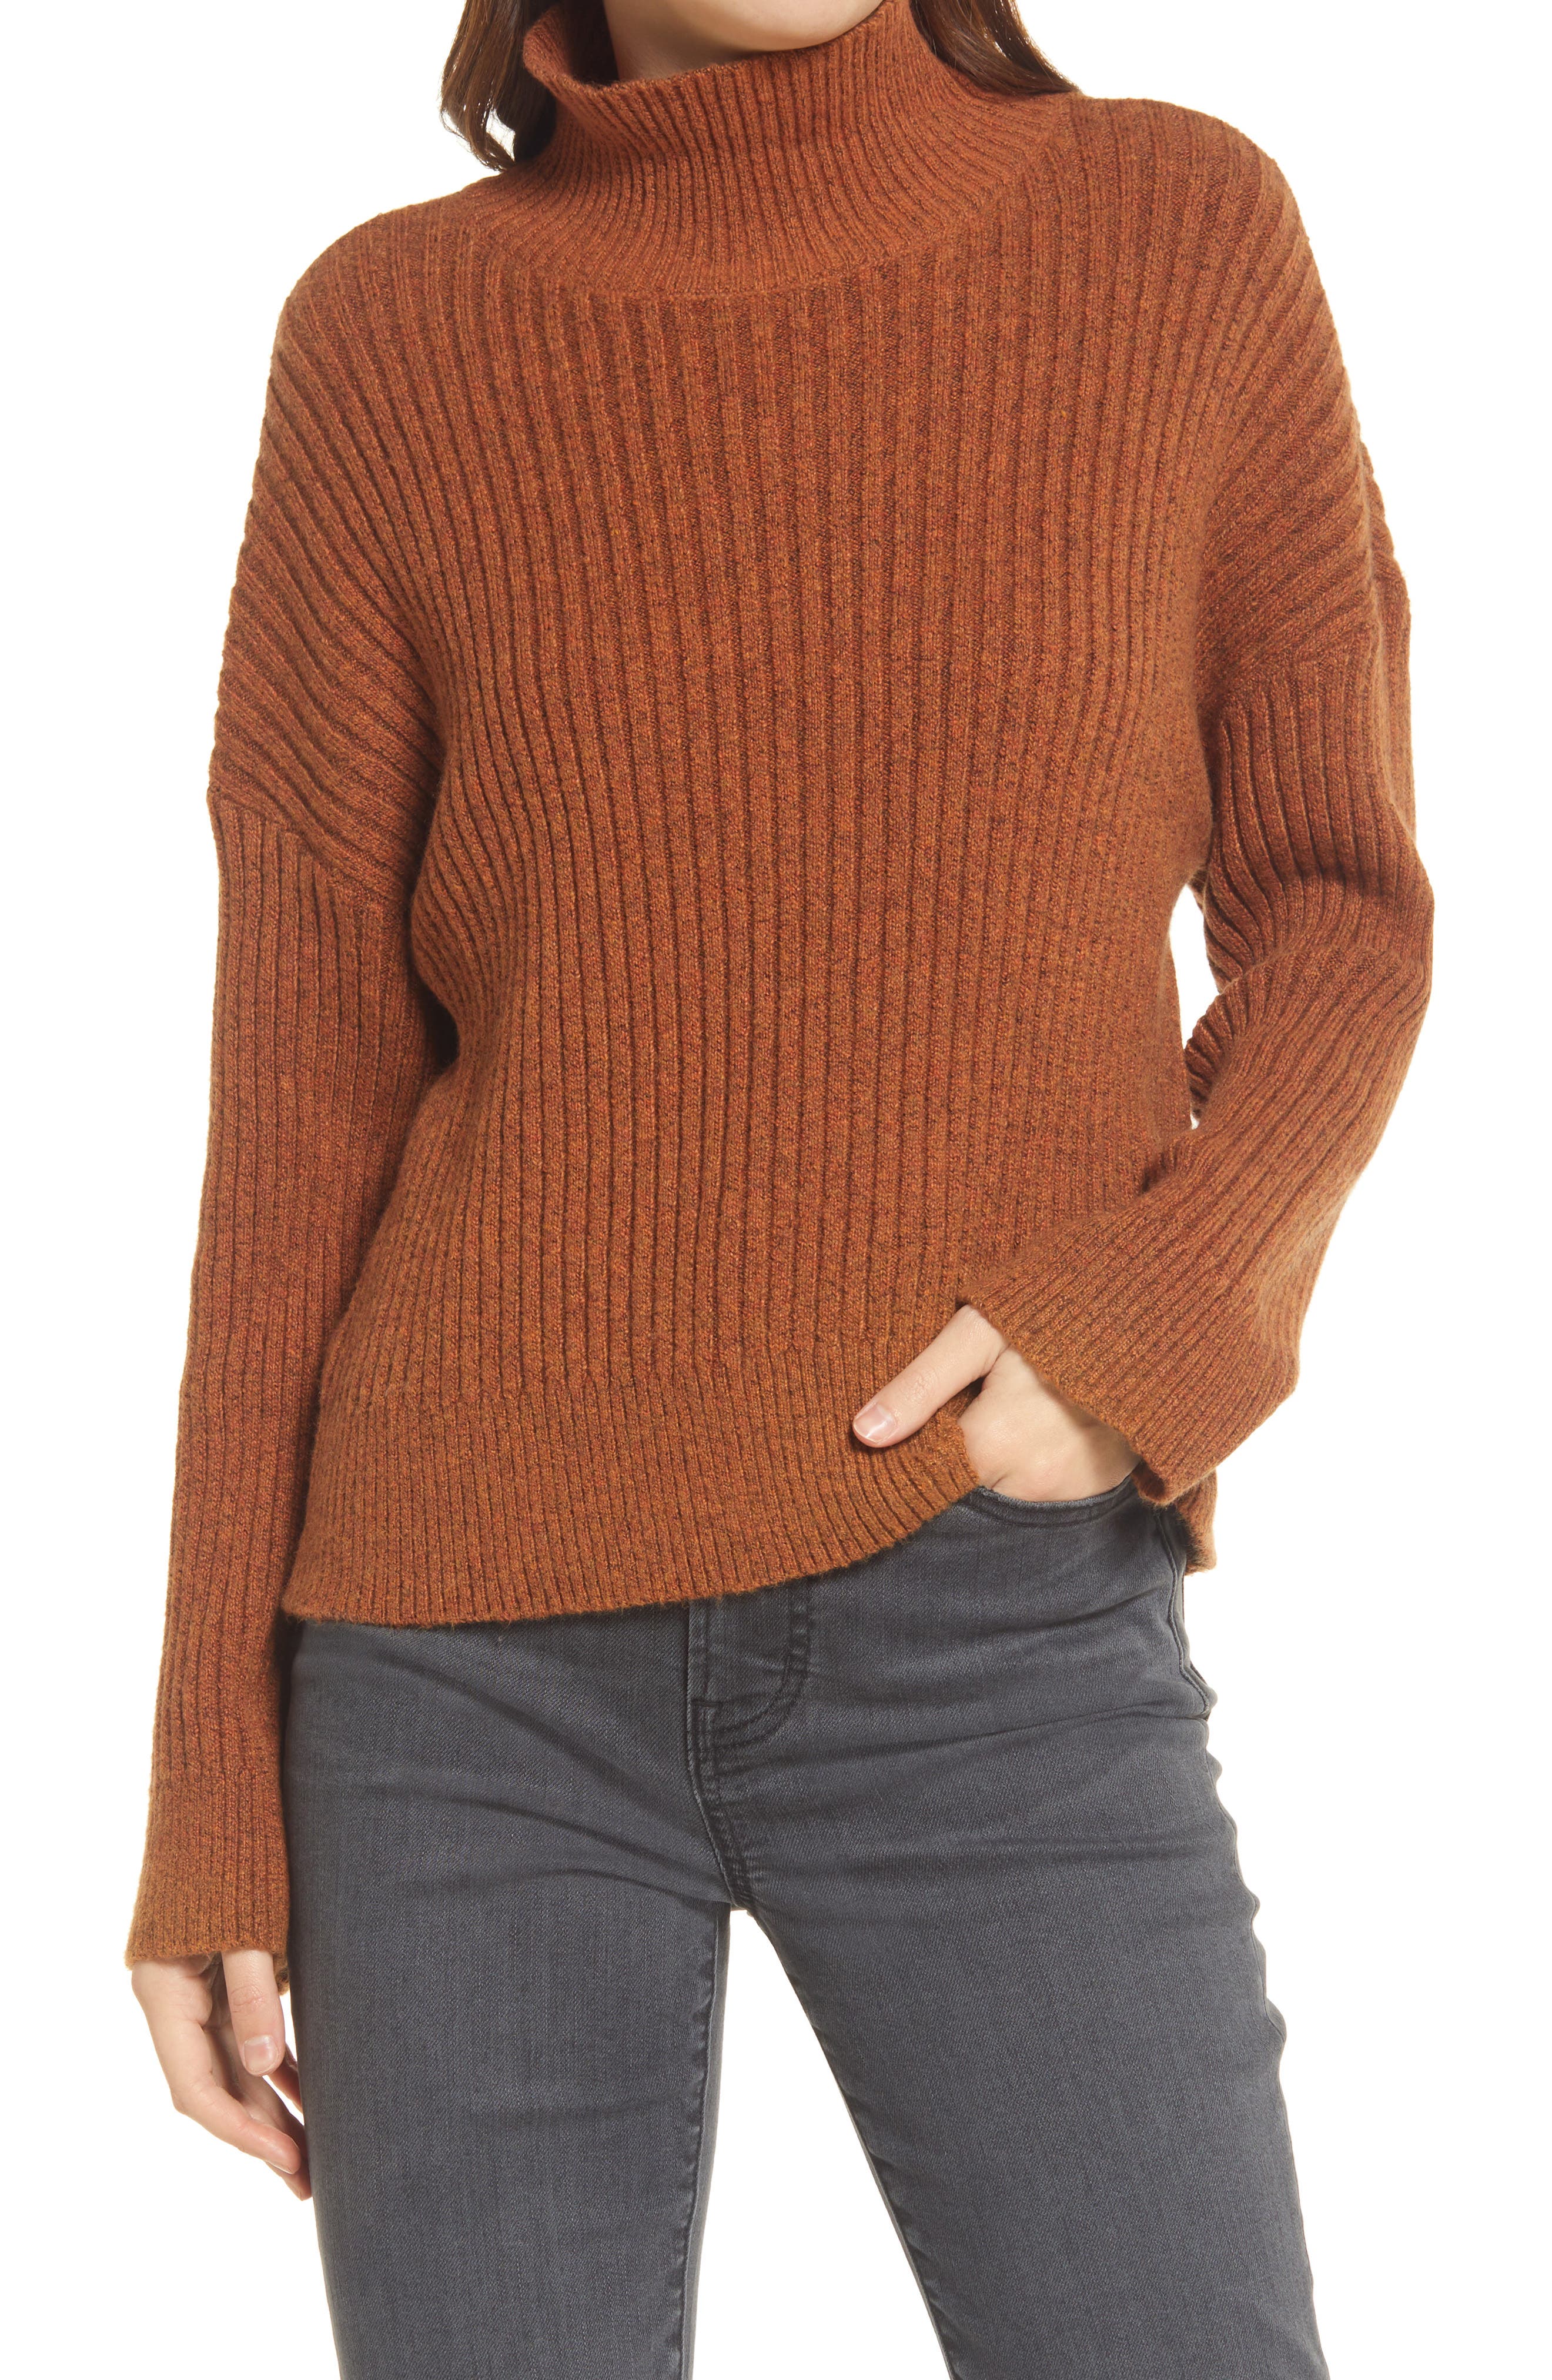 Women's Slim cozy Knitted Half-Turtleneck Cashmere Pullover Sweater wool Jumper